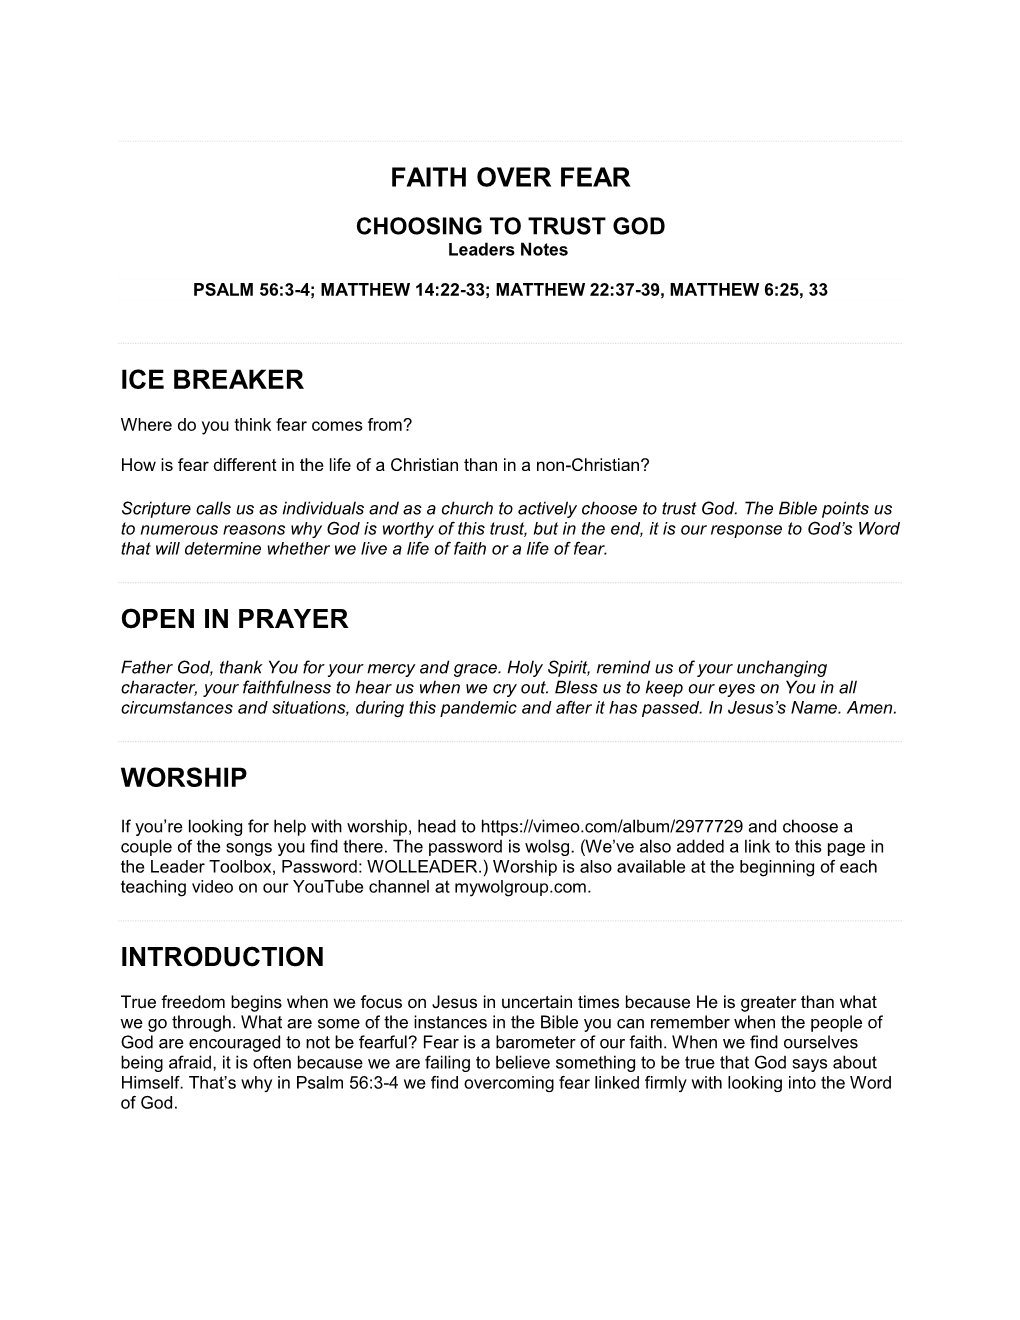 Faith Over Fear Ice Breaker Open in Prayer Worship Introduction